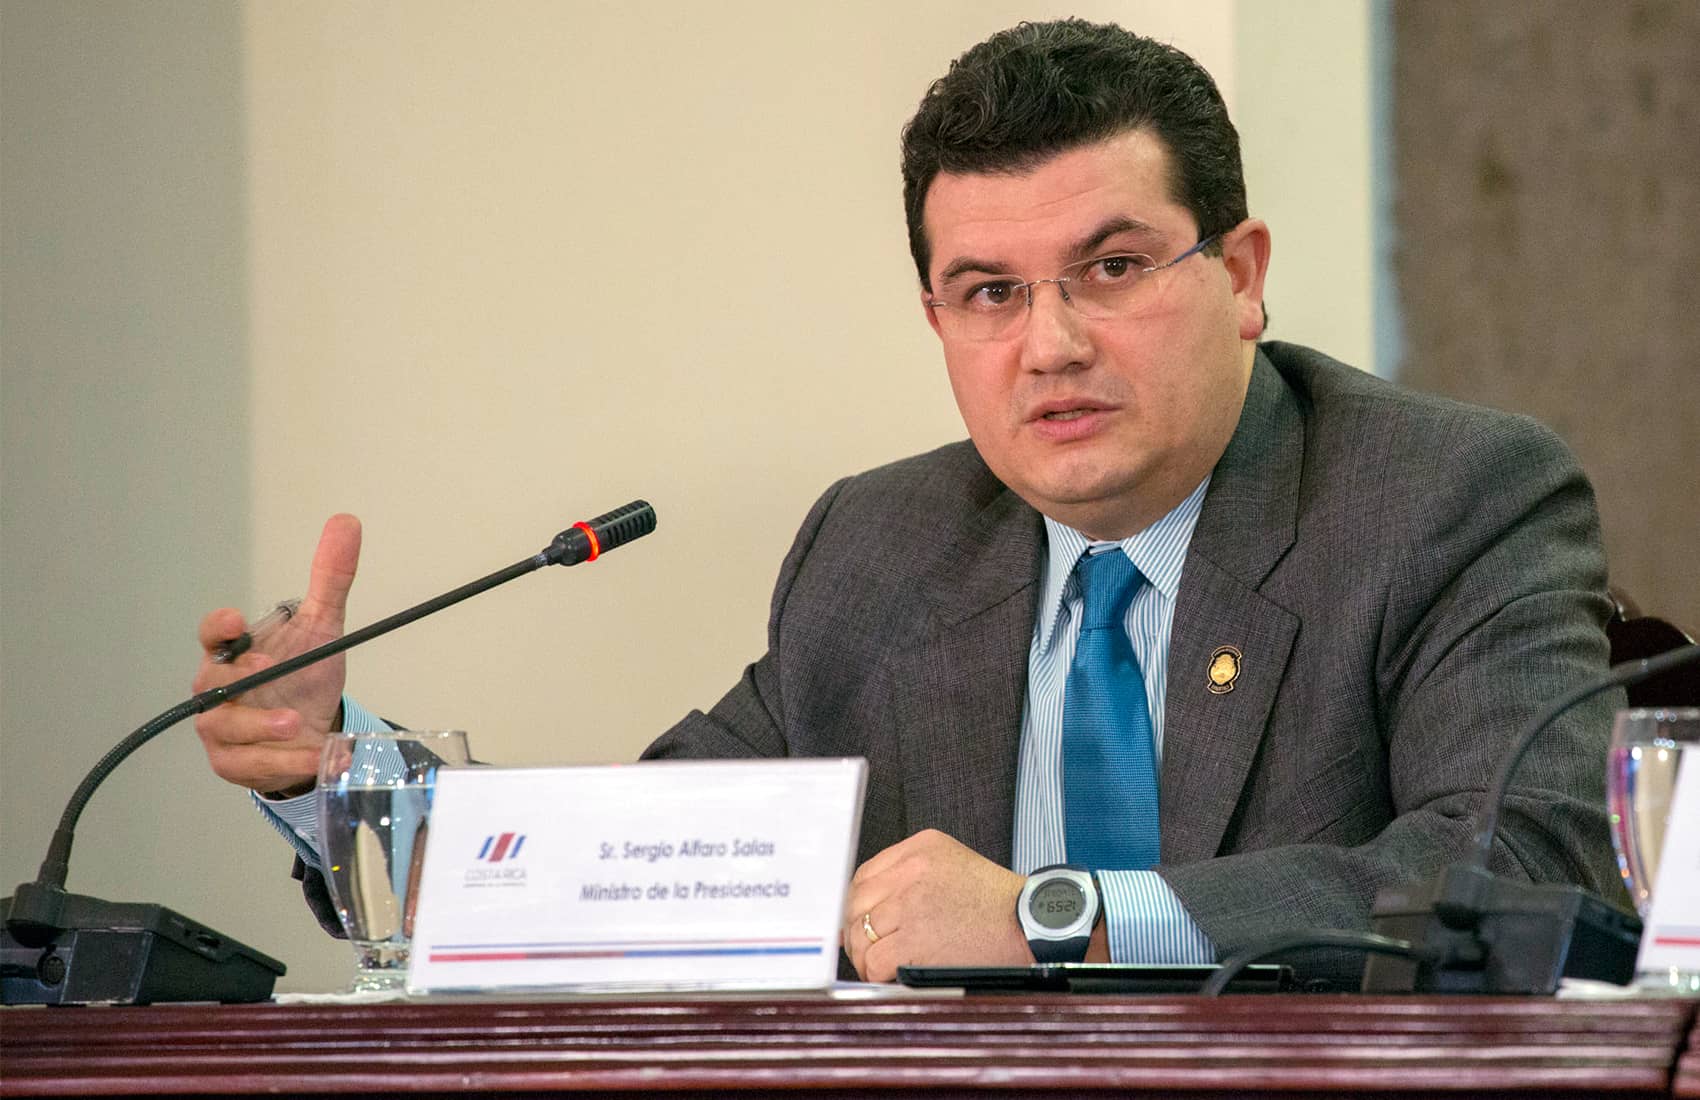 No fiscal reform yet: Presidency Minister Sergio Alfaro